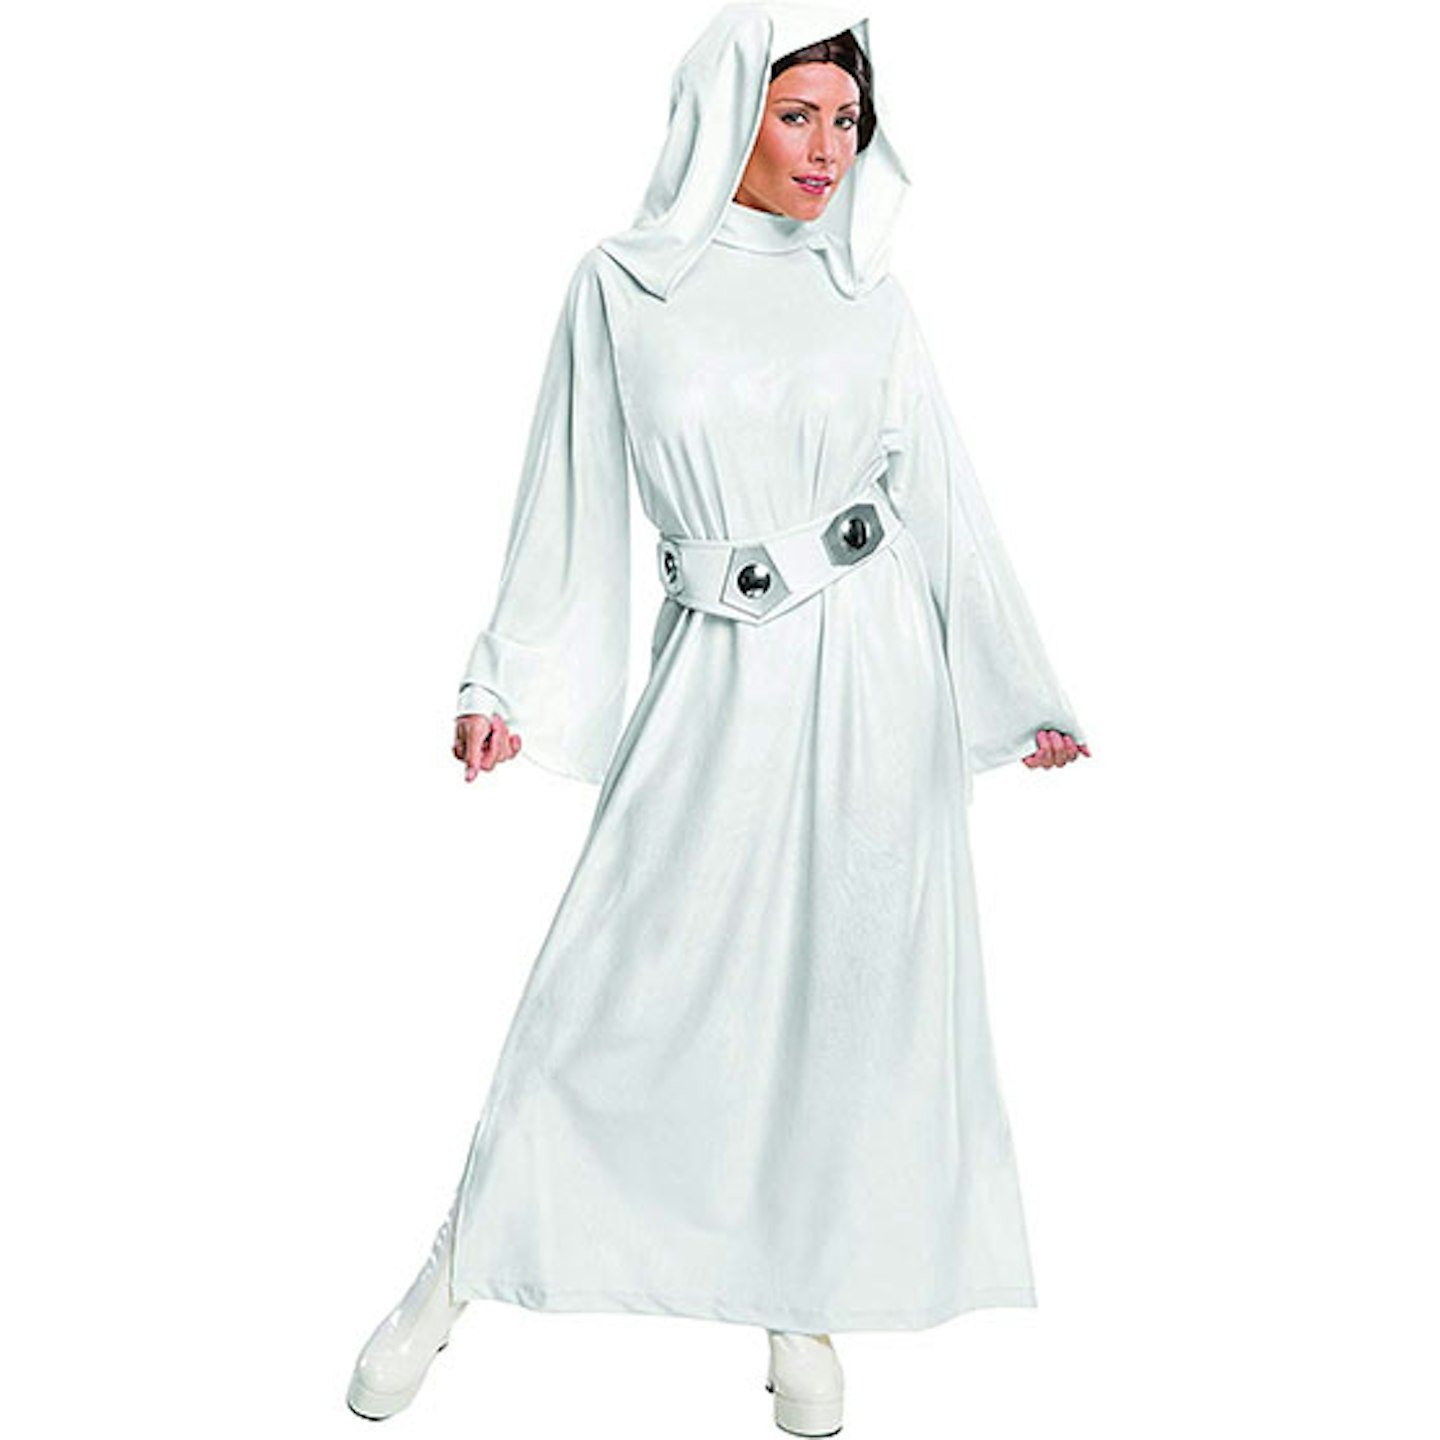 Rubie's 810357 Official Star Wars Princess Leia Costume